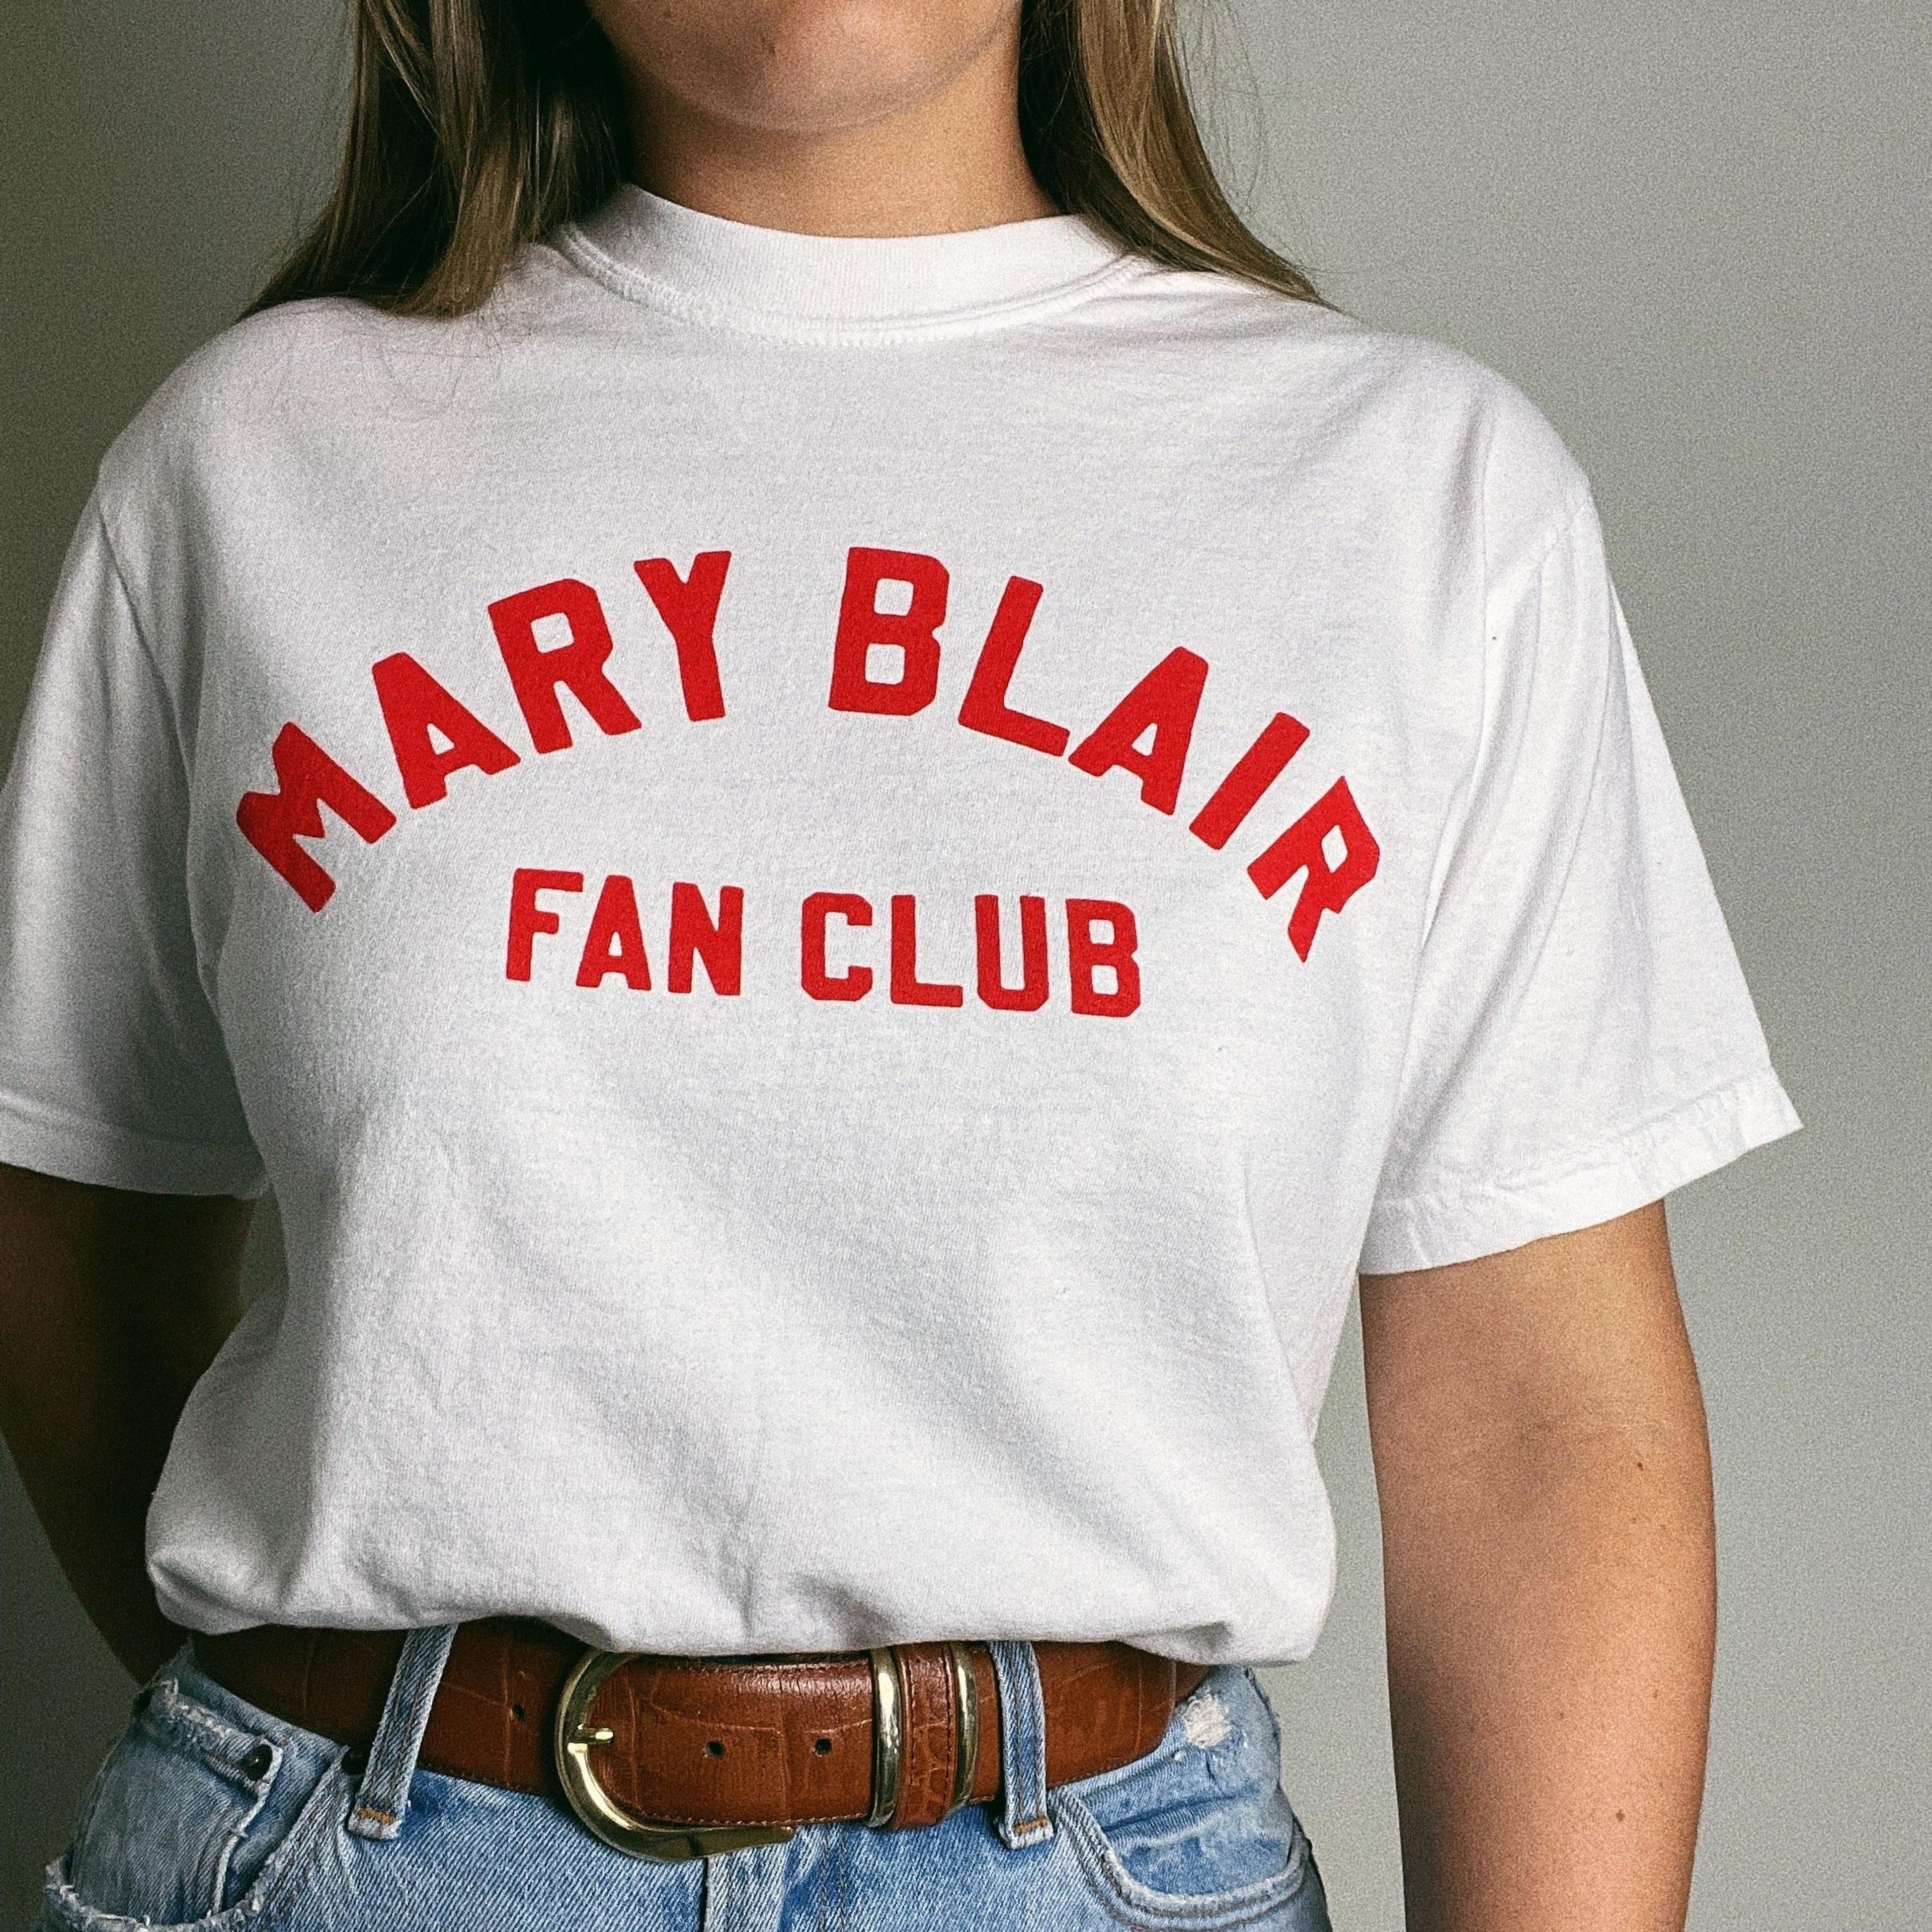 Mary Blair T-Shirt